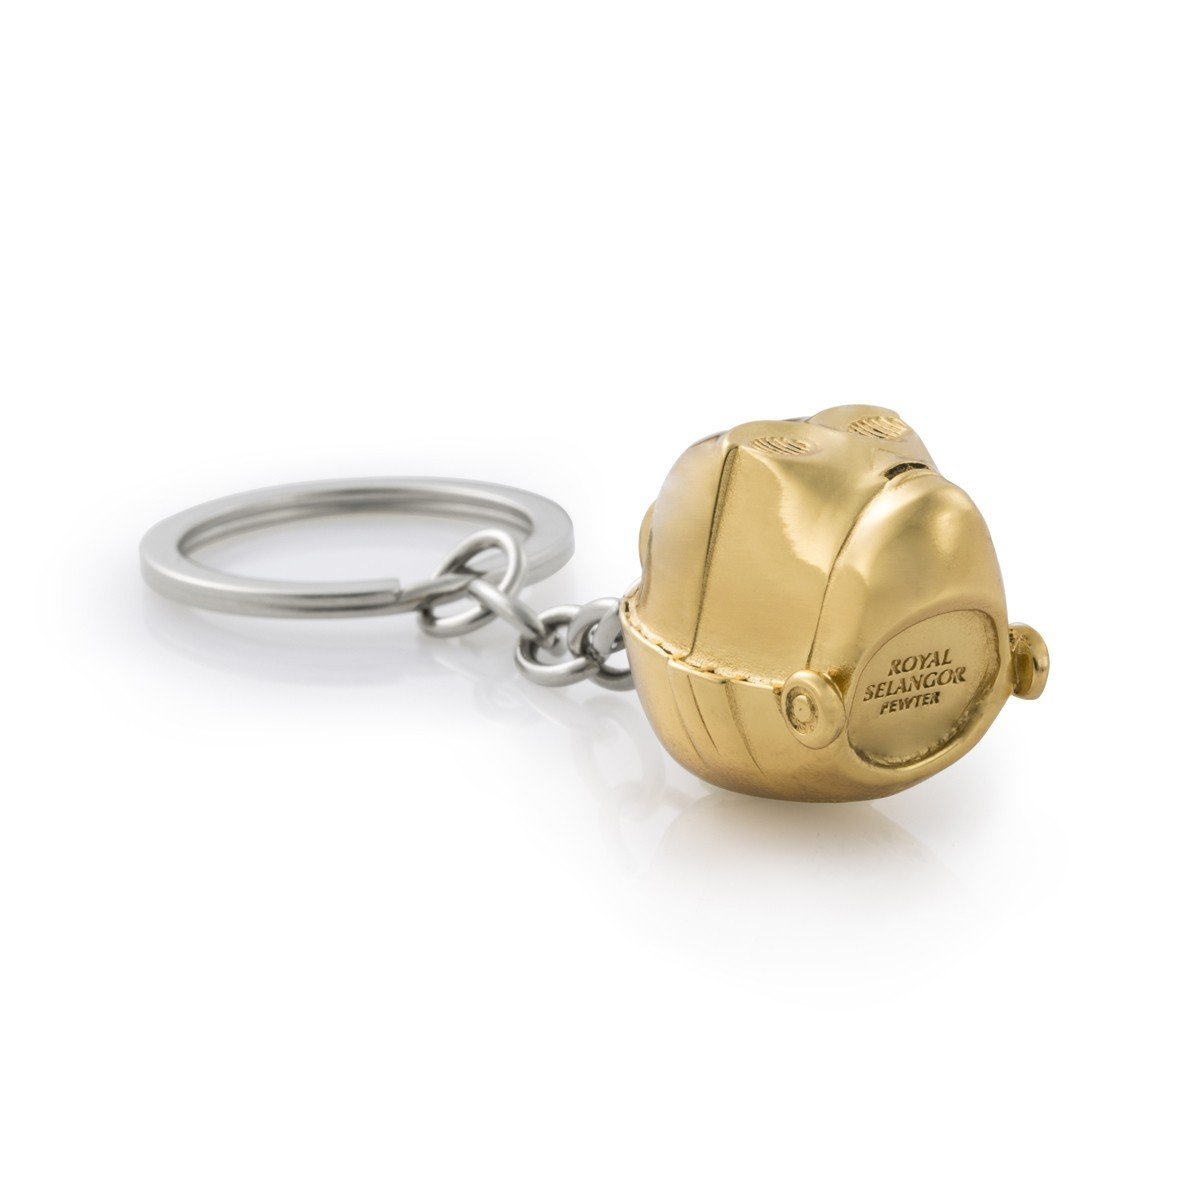 Star Wars C-3PO 24K Gold Gilt Keychain - Collectible Gift